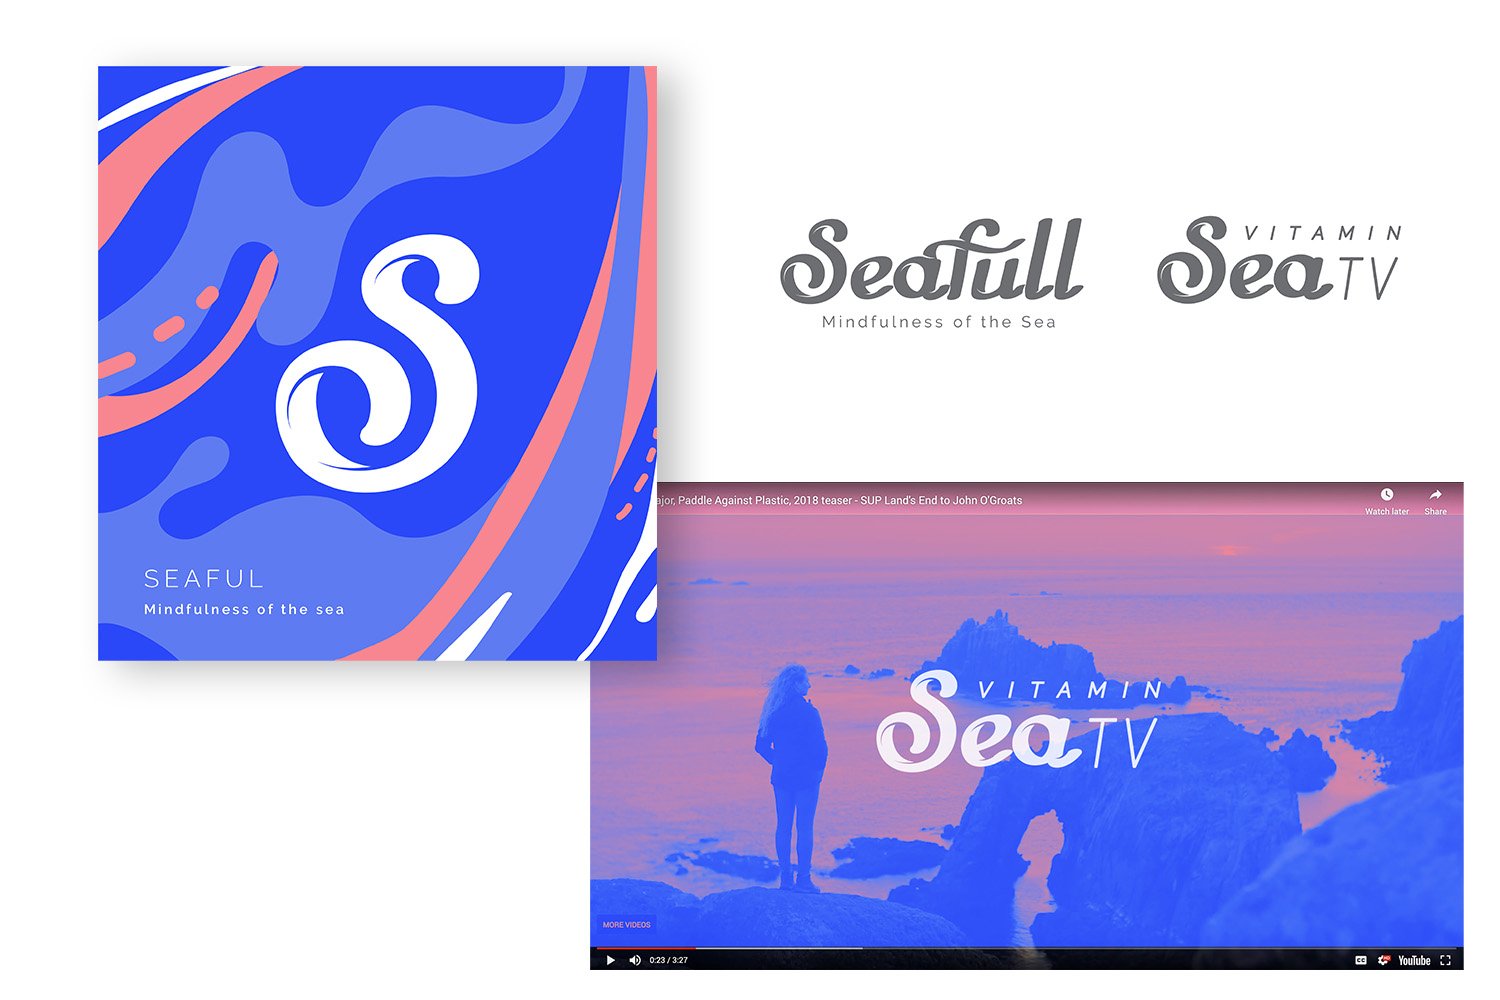 Seafull - Logo Usage and Media Design